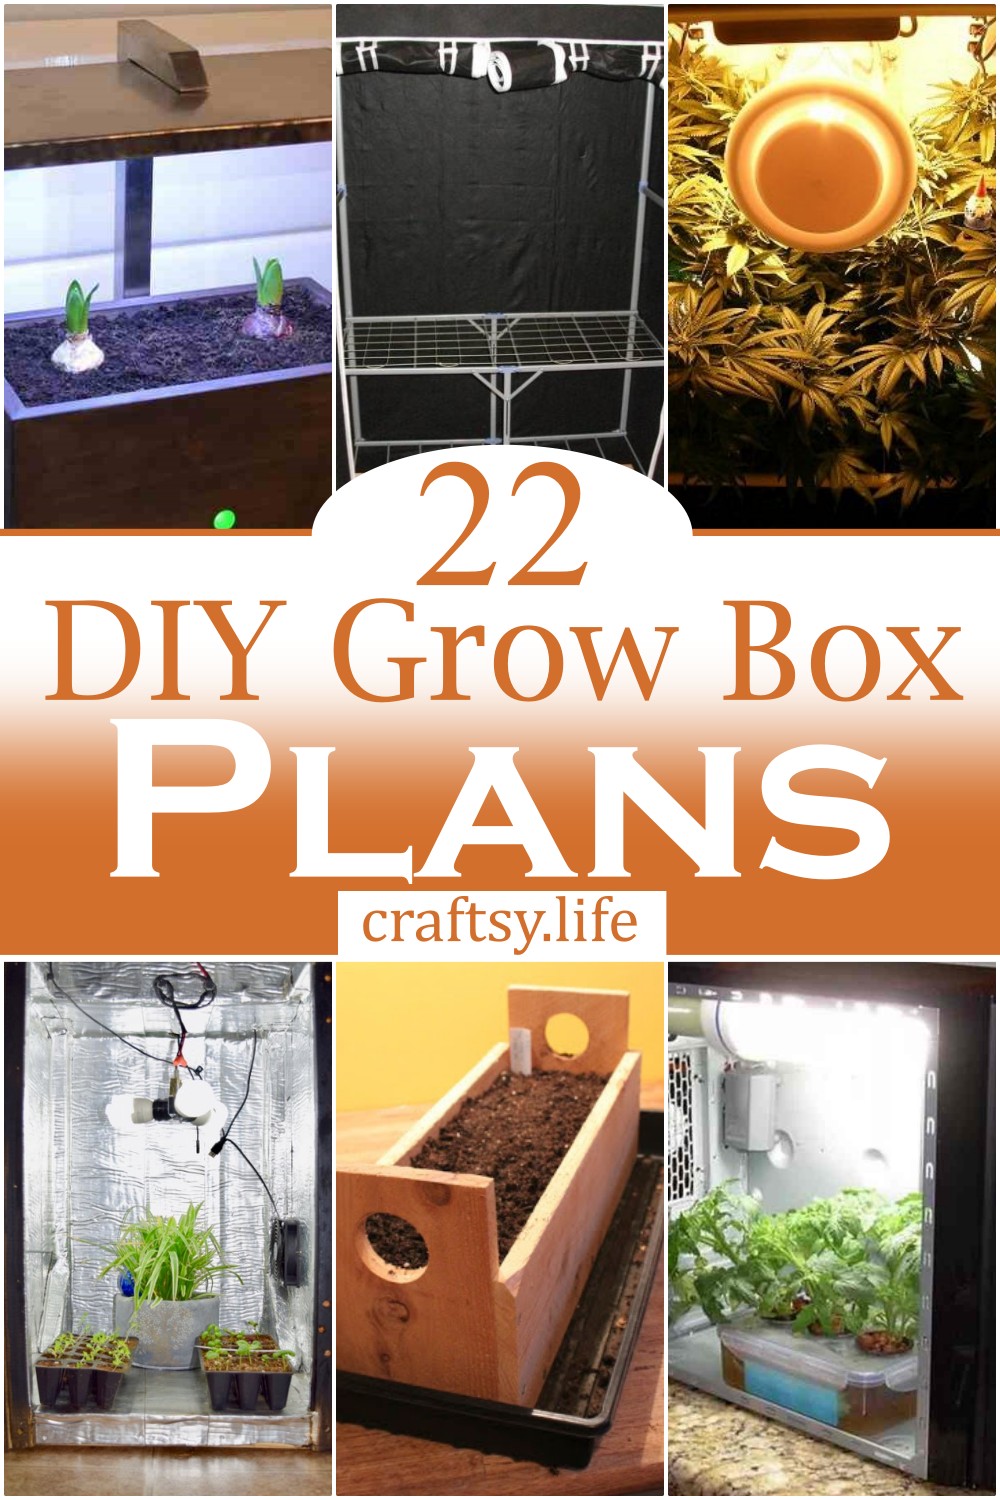 DIY Grow Box Plans